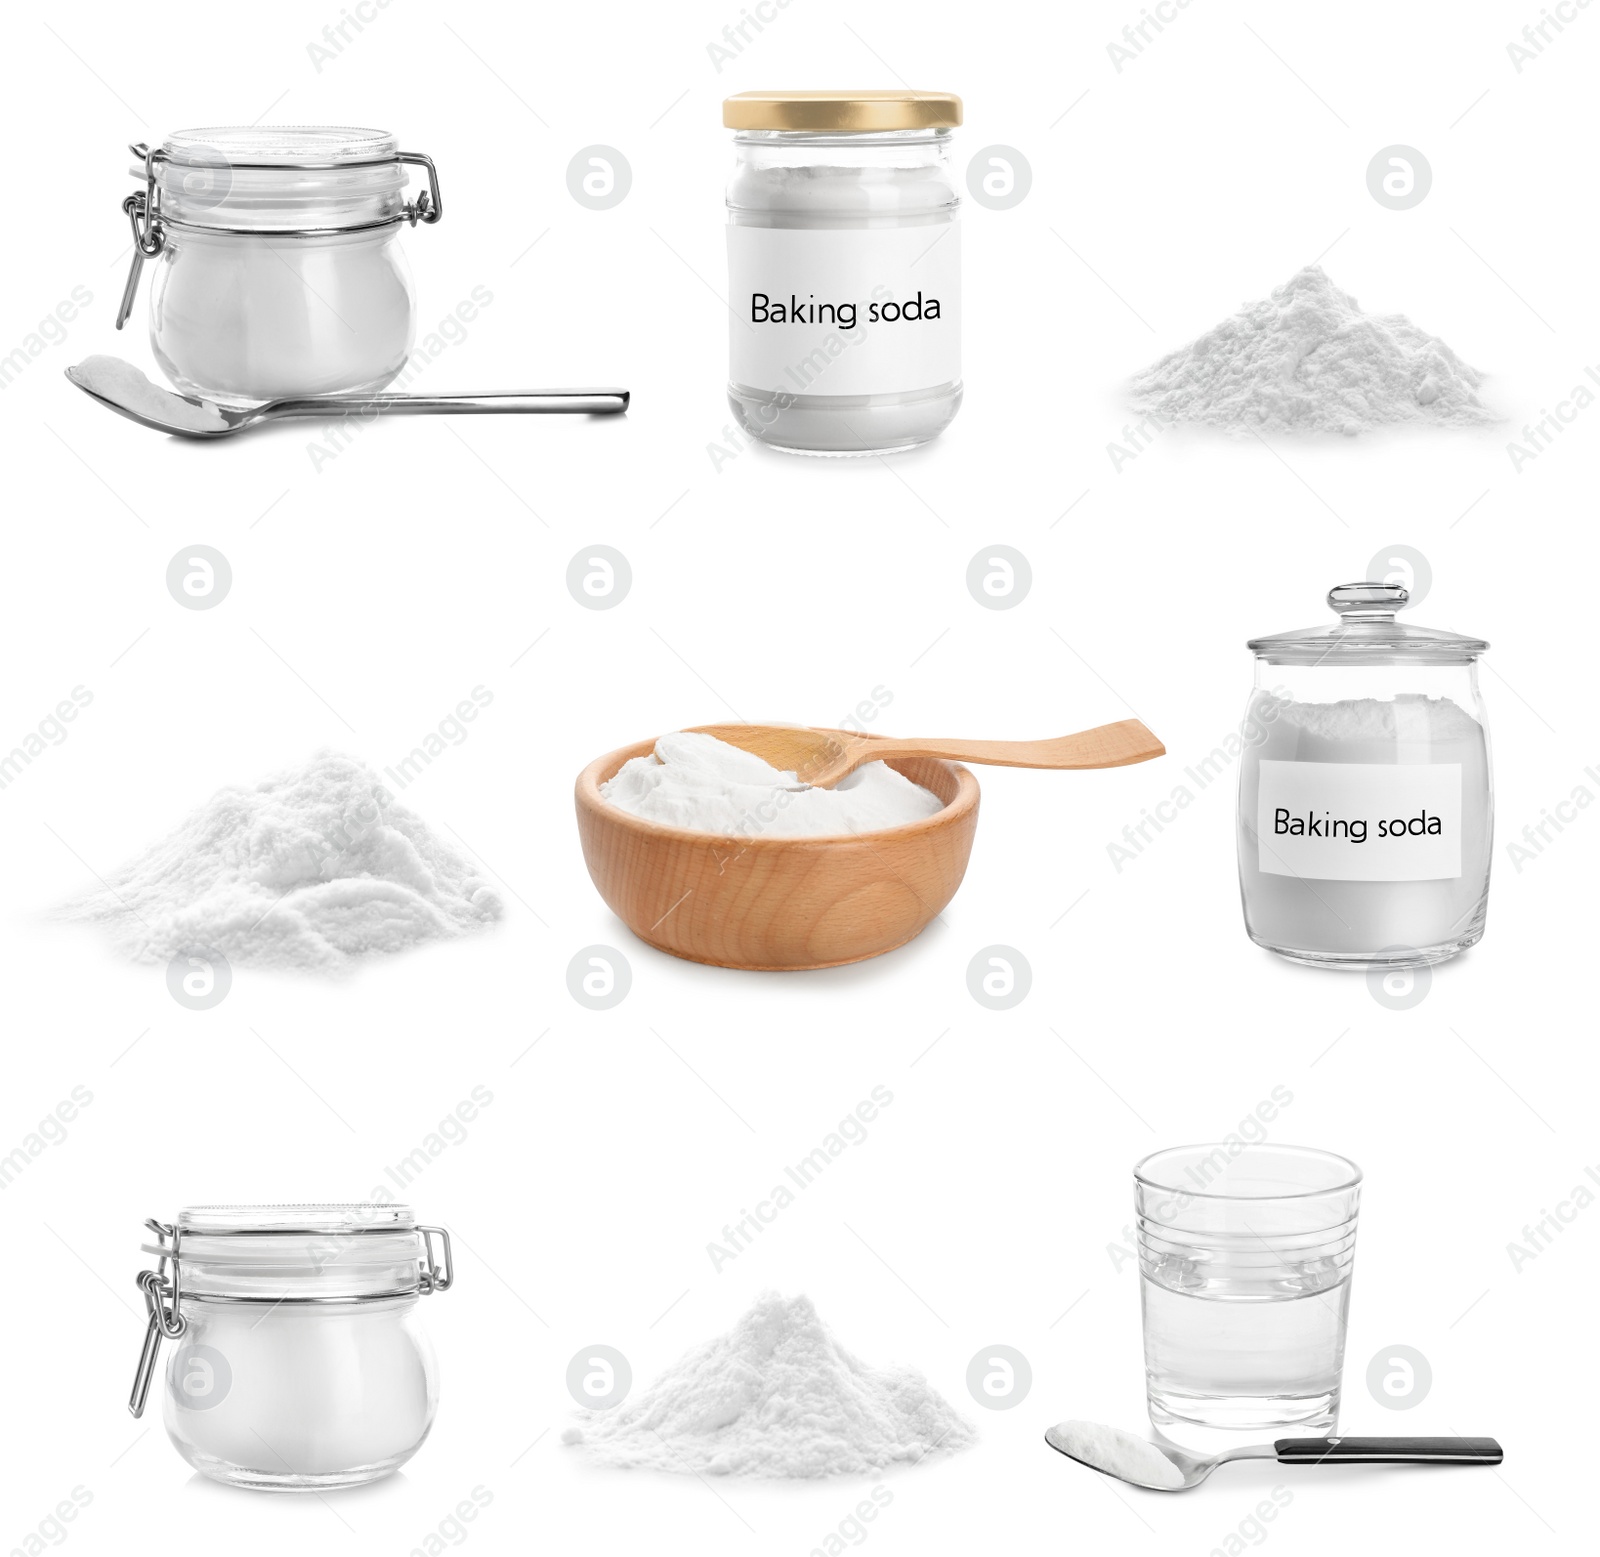 Image of Set with kitchenware and baking soda on white background